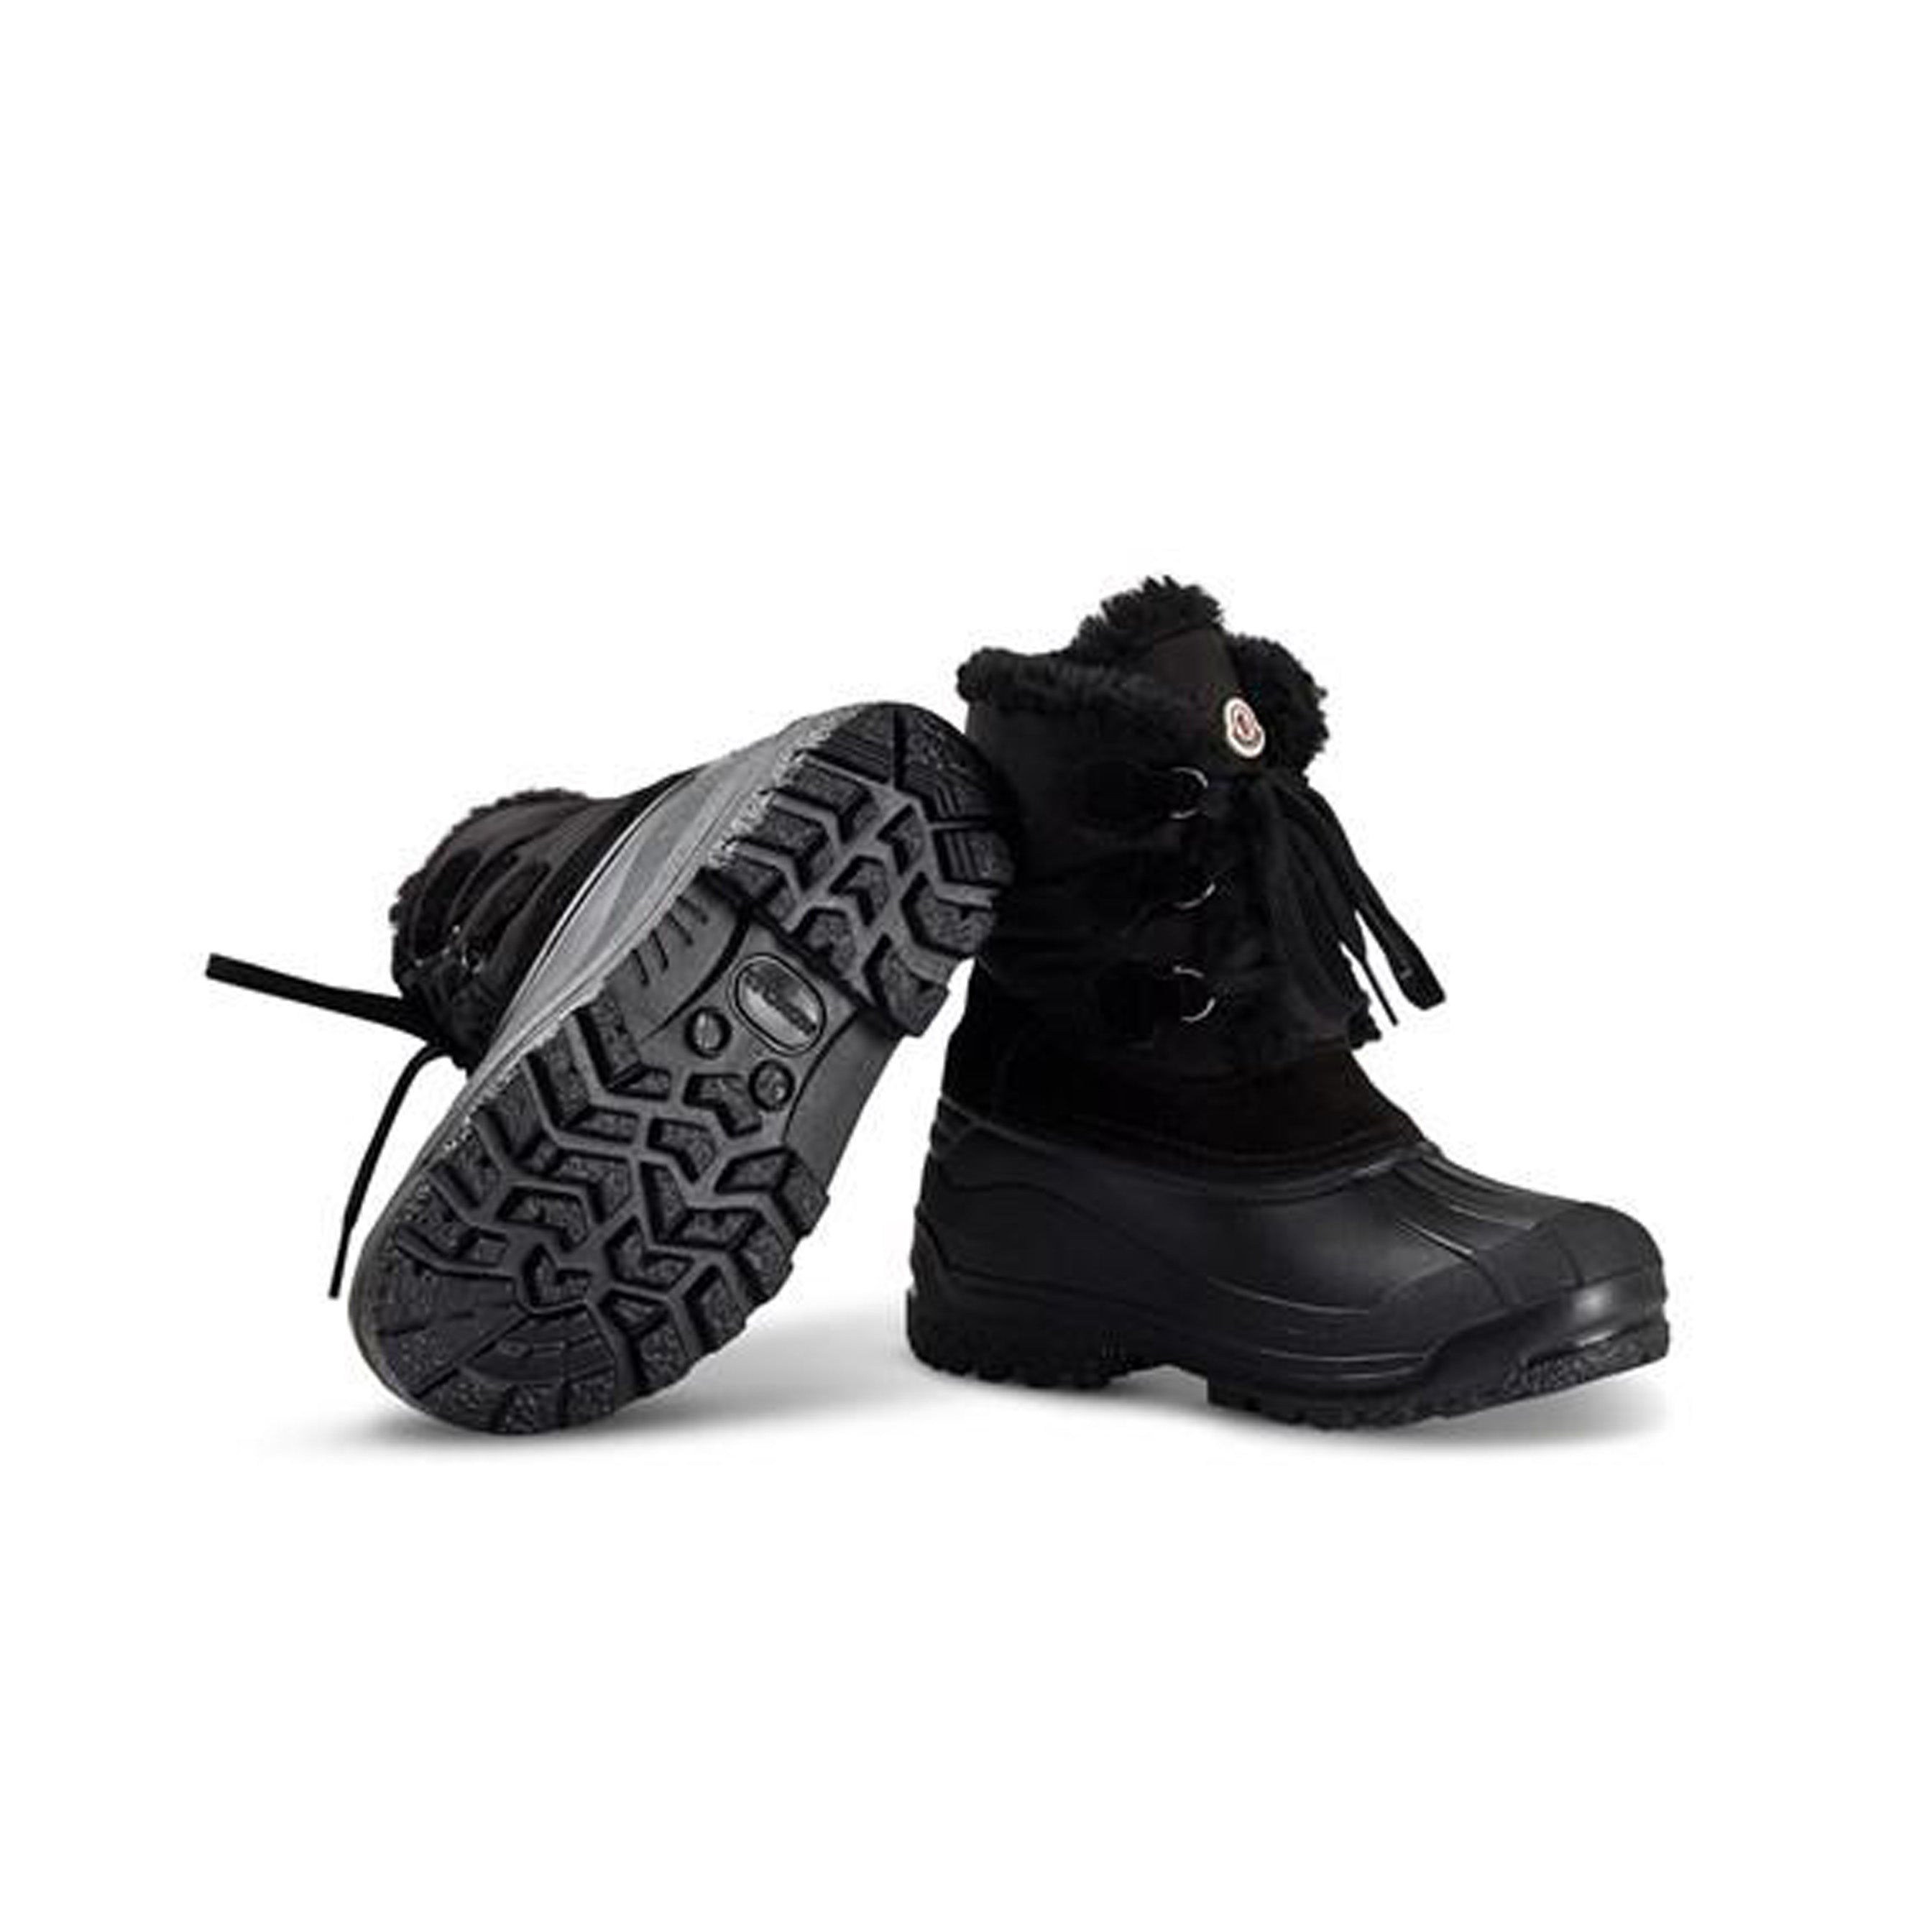 Moncler Winter Boots